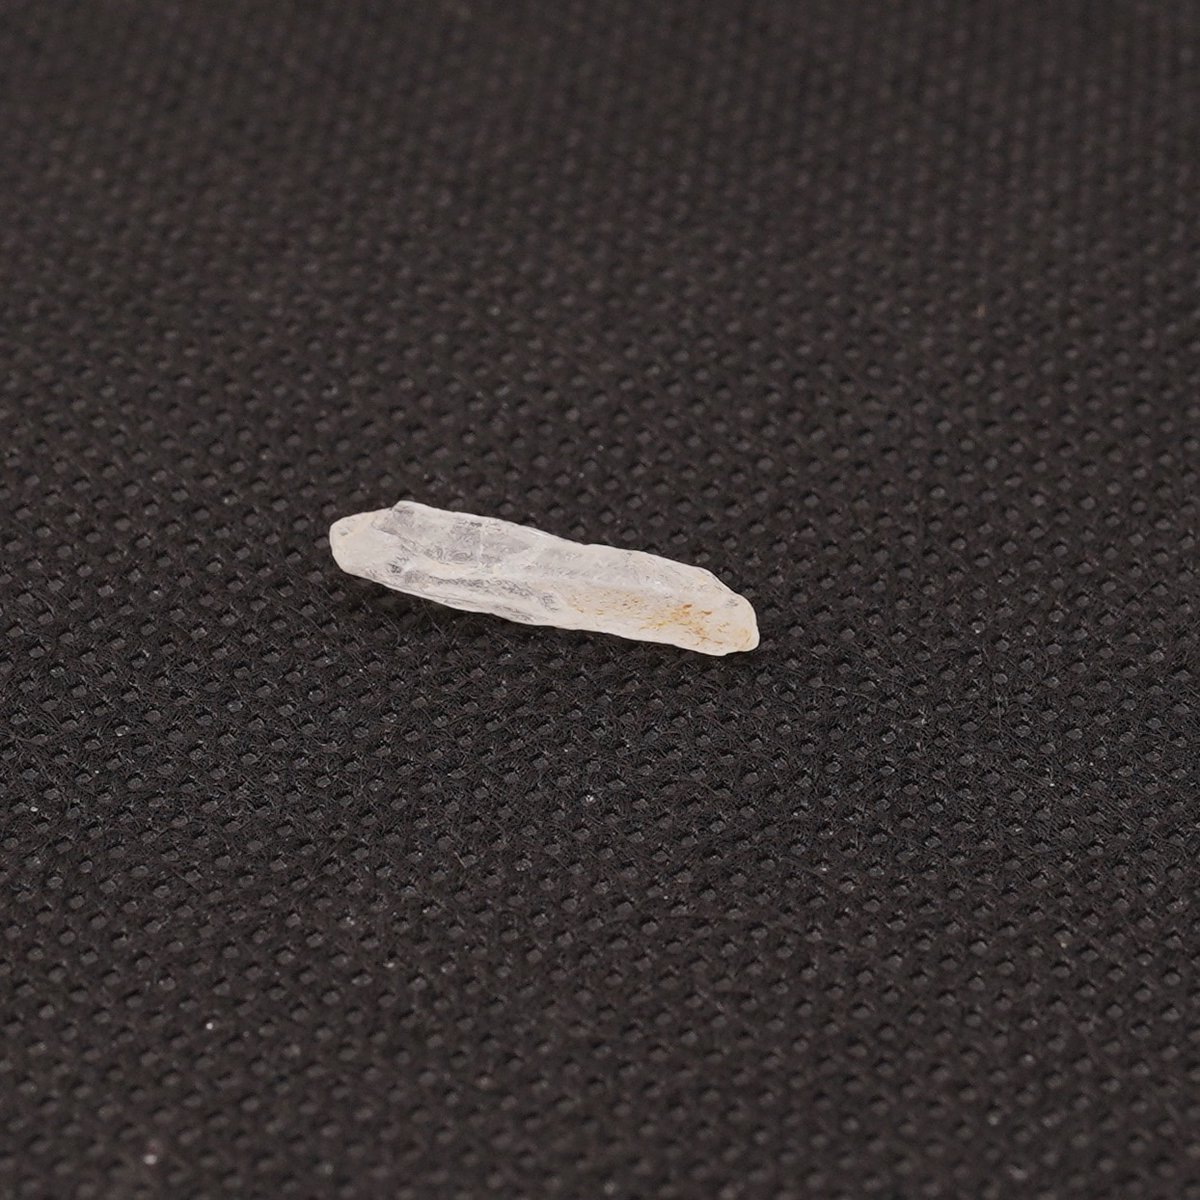 Fenacit nigerian cristal natural unicat f132